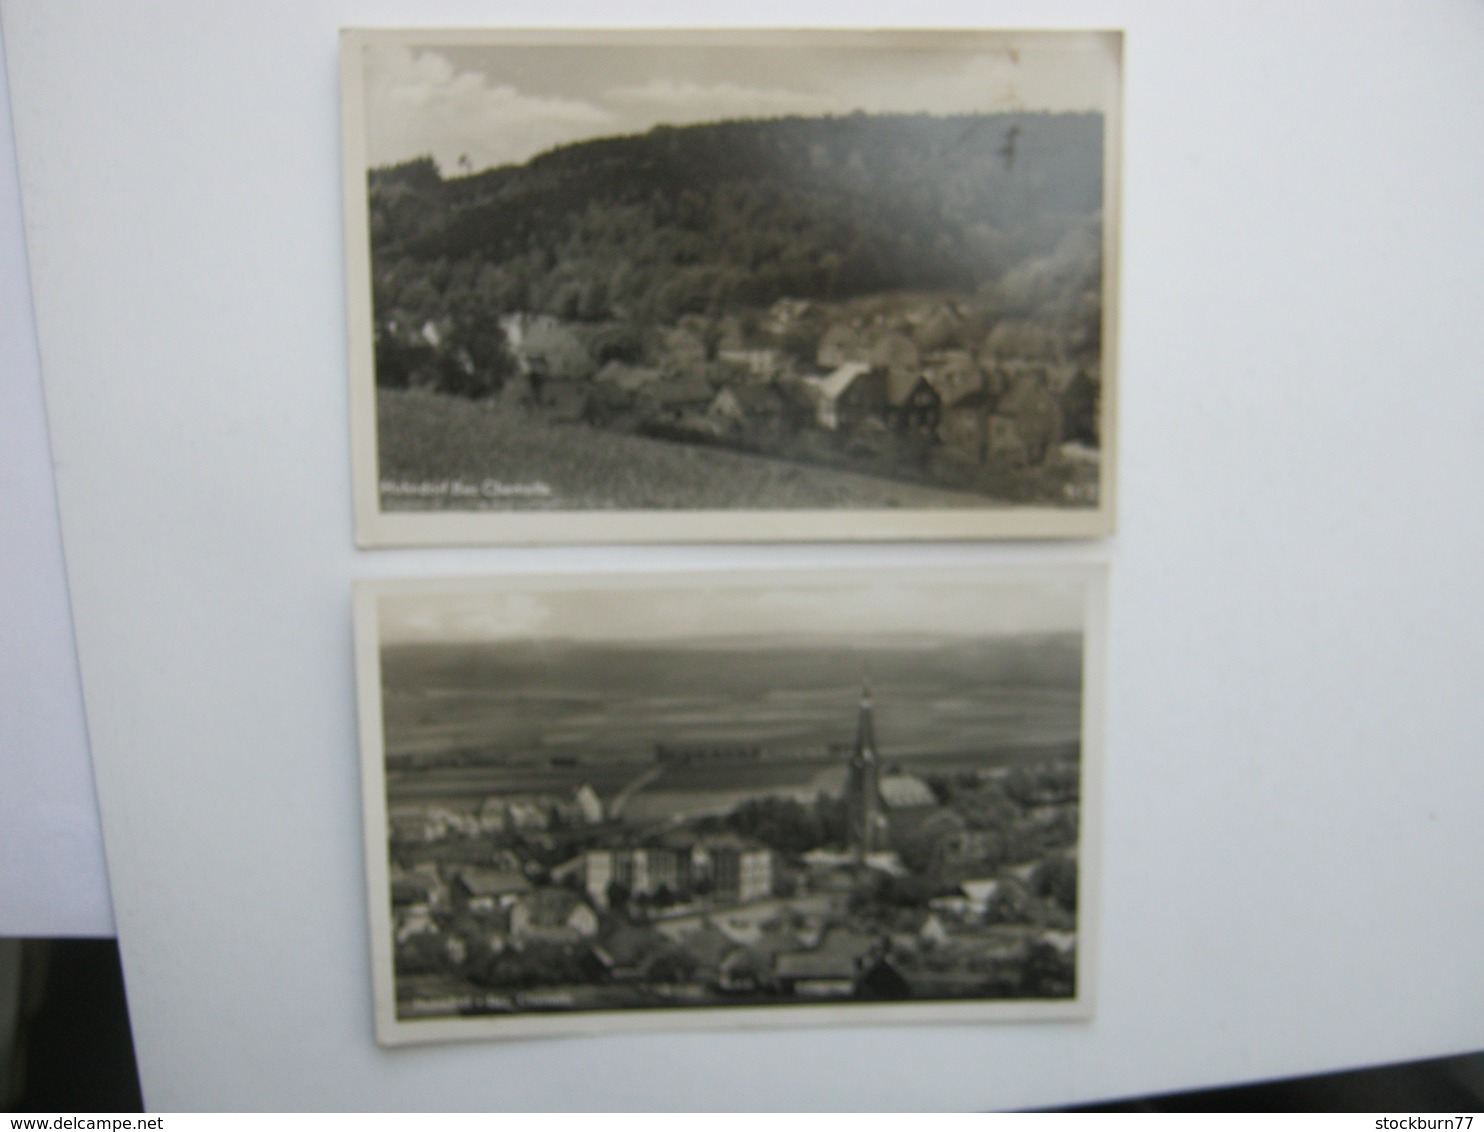 HOHNDORF ,  2 Schöne Karten Um  1940 - Hohndorf